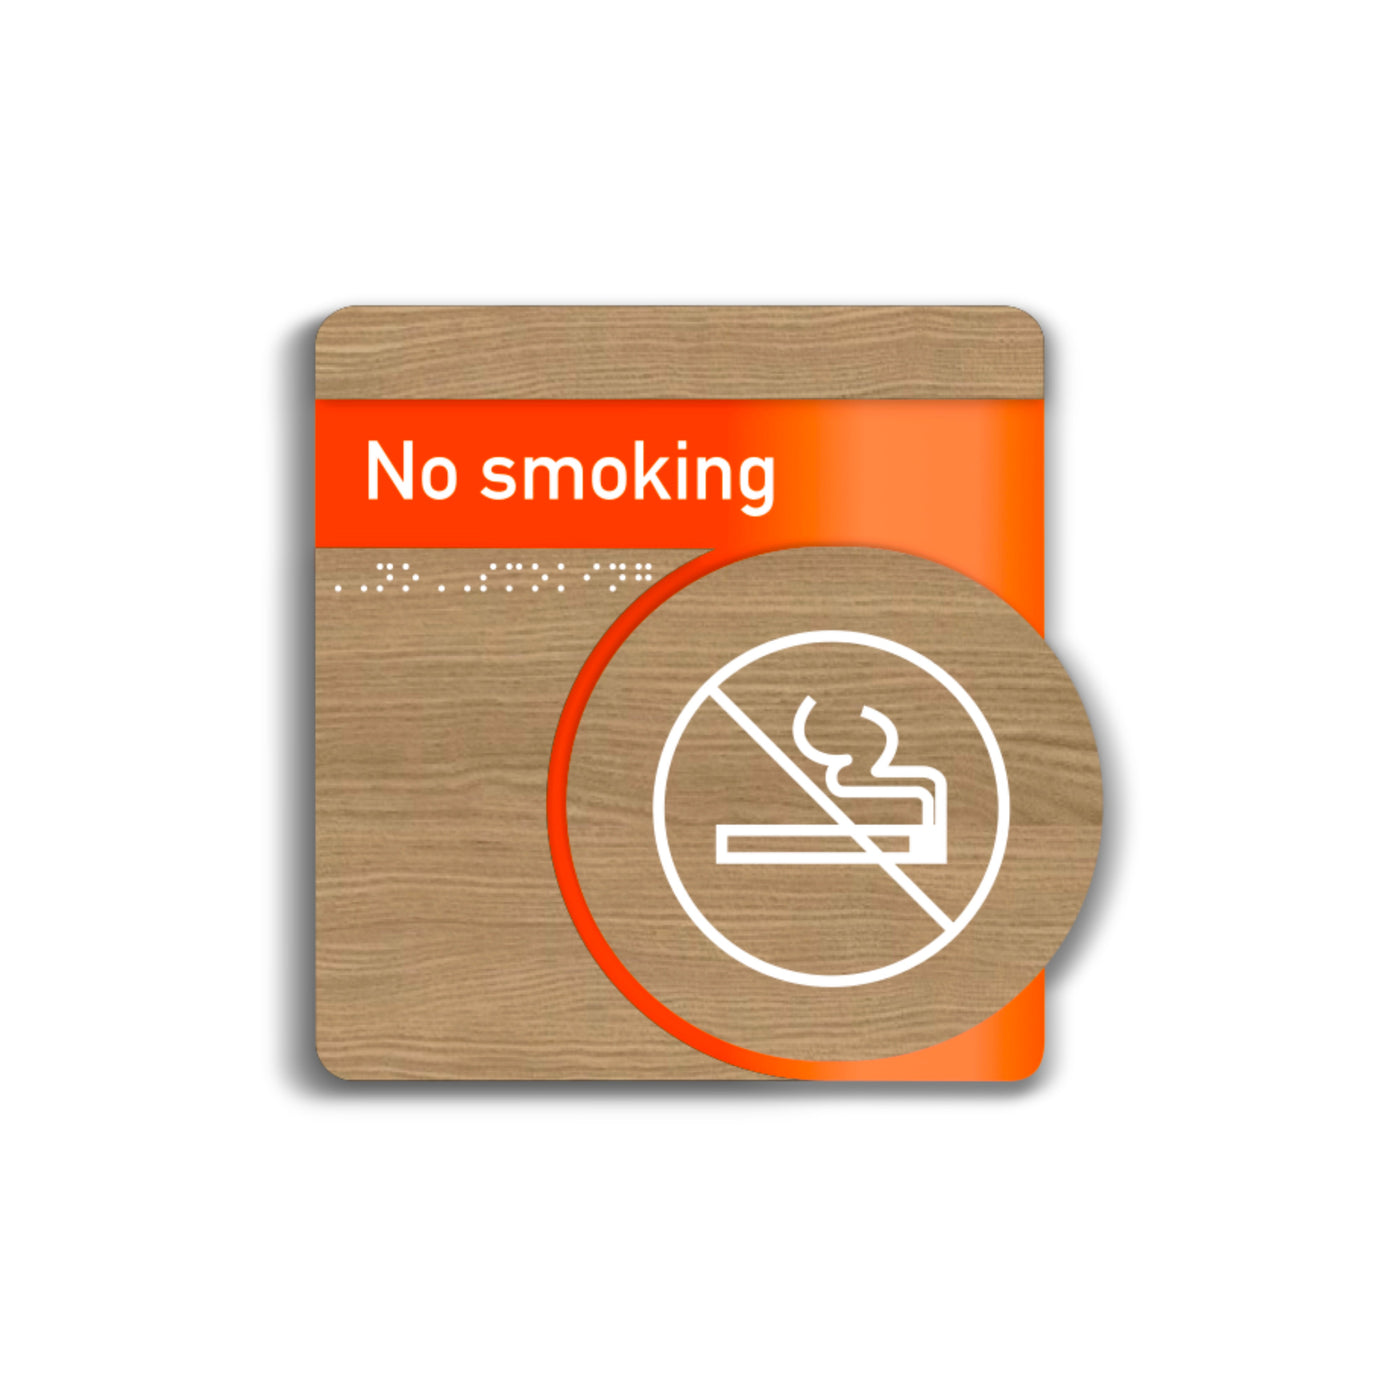 Information Signs - No Smoking Sign & Smoking Prohibited Signage "Genova" Design